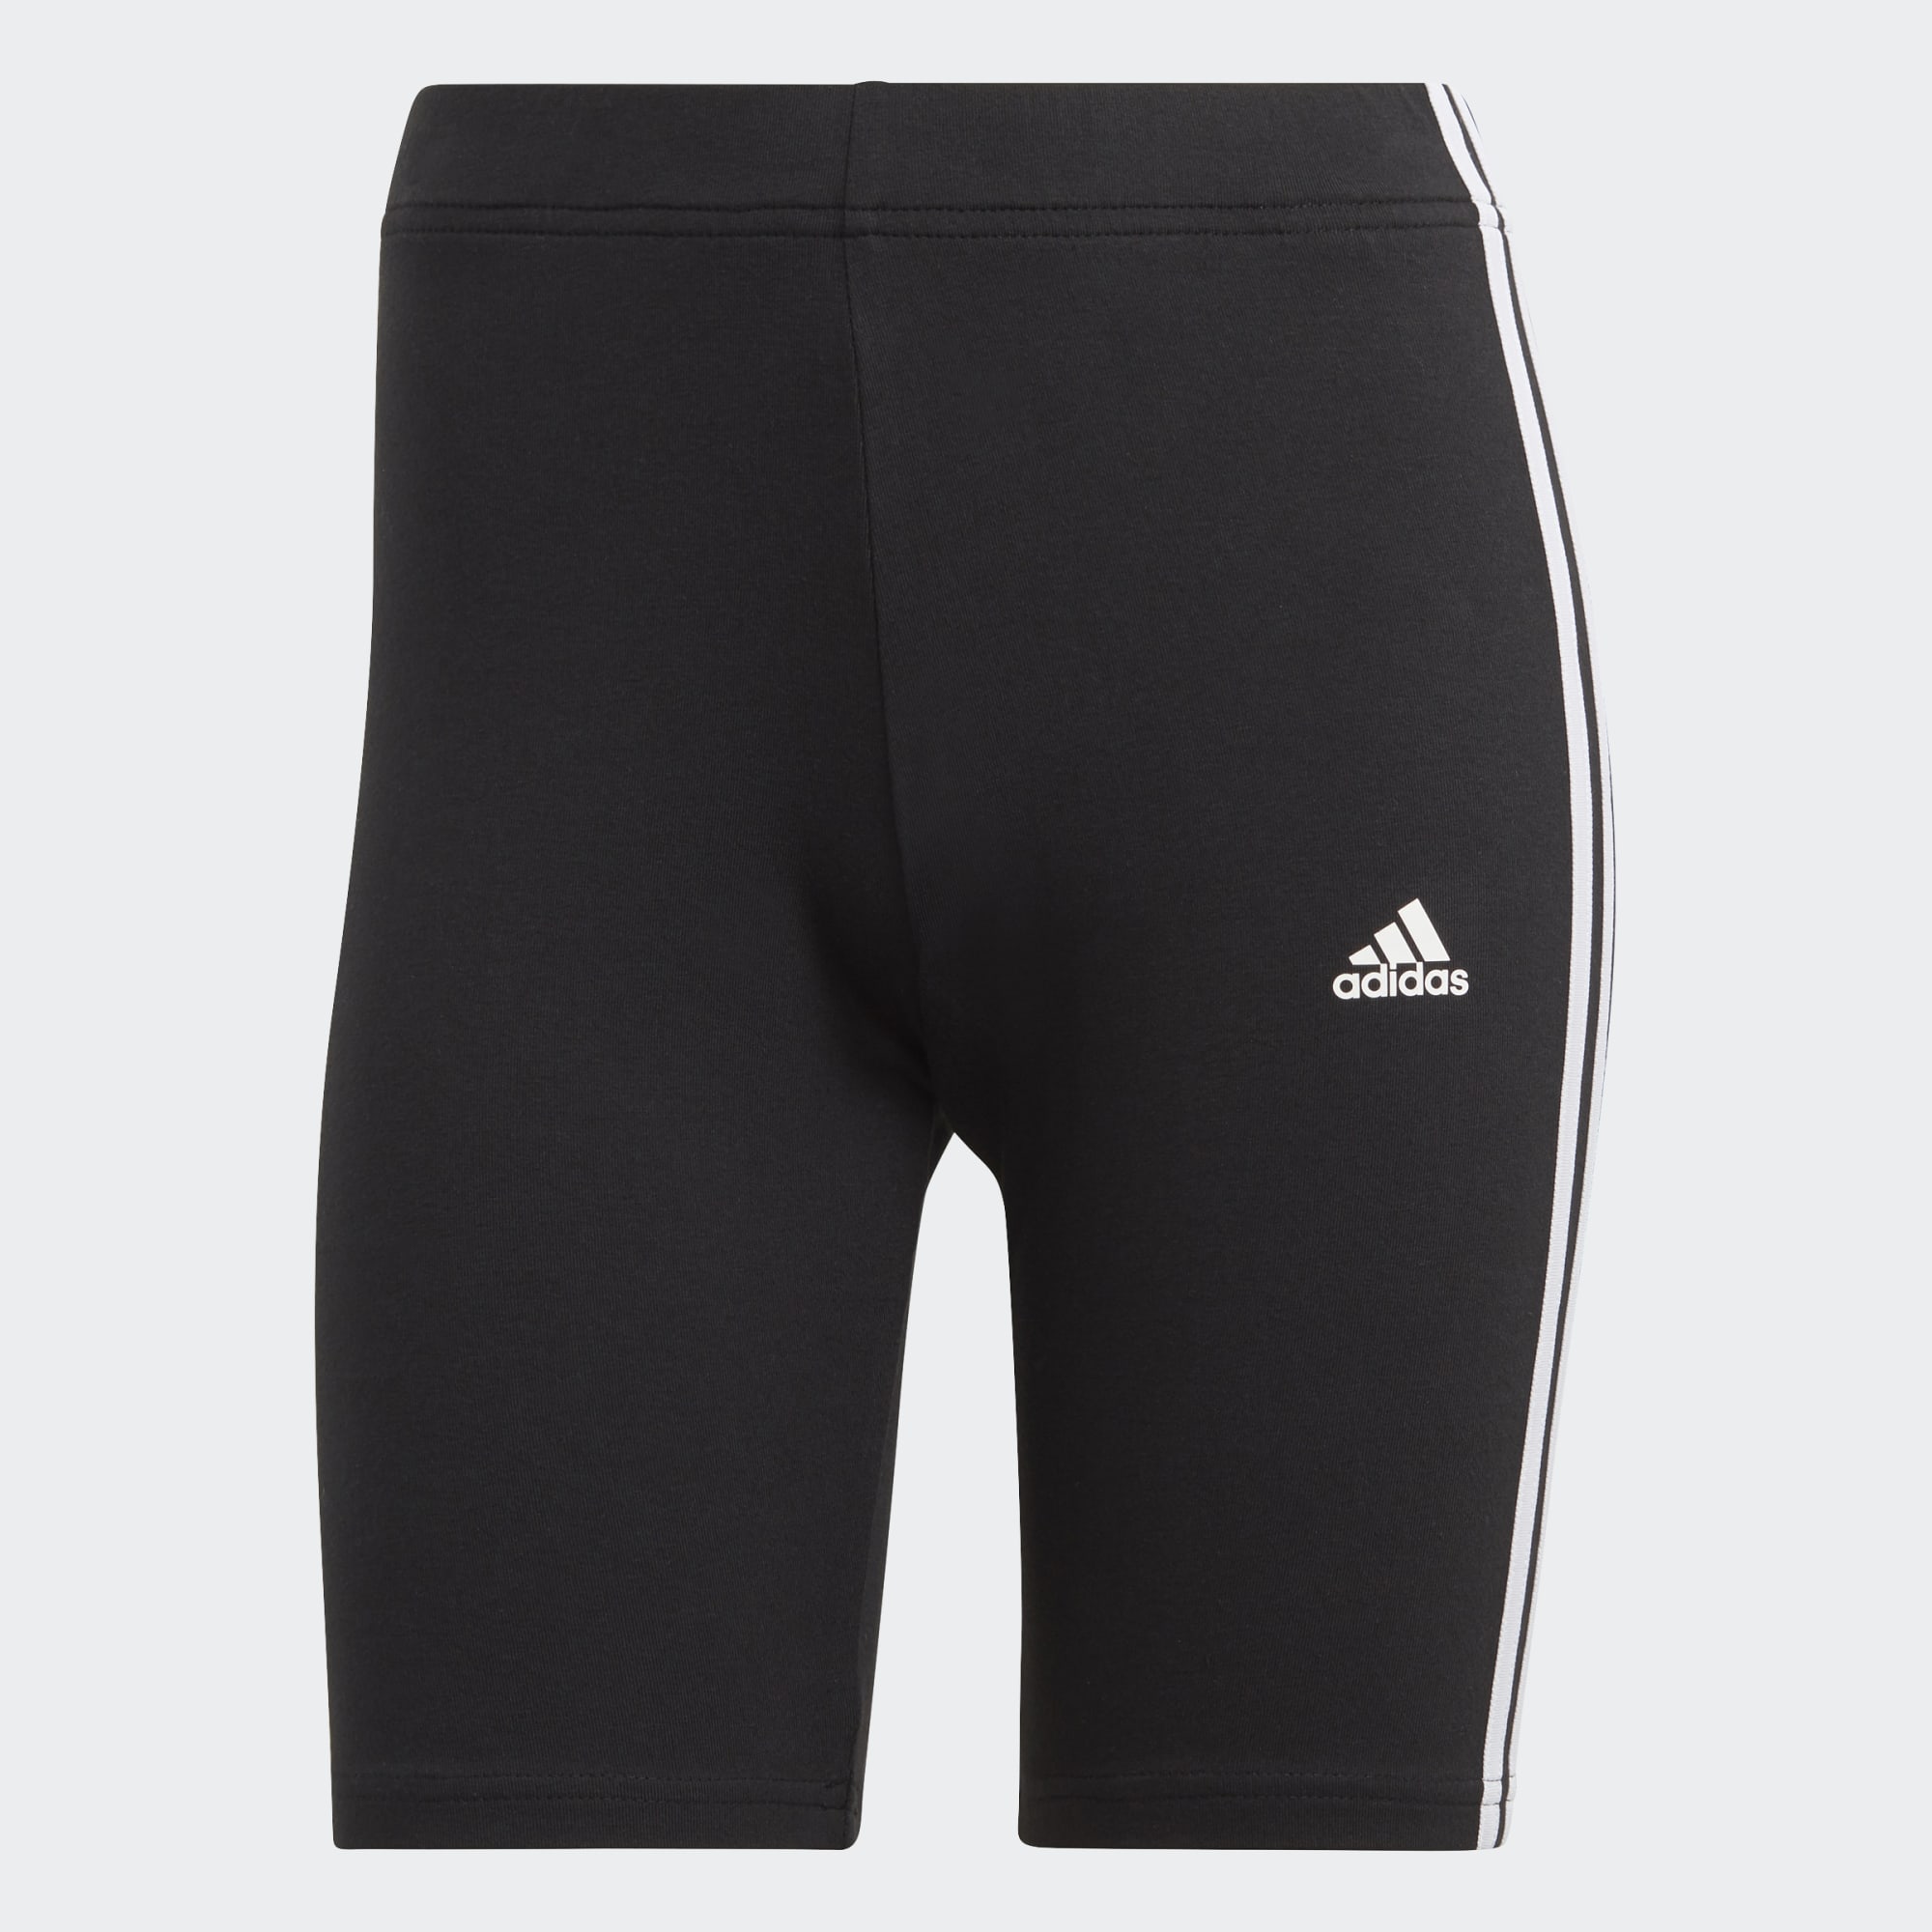 Adidas Women’s Essentials 3-Stripes Short